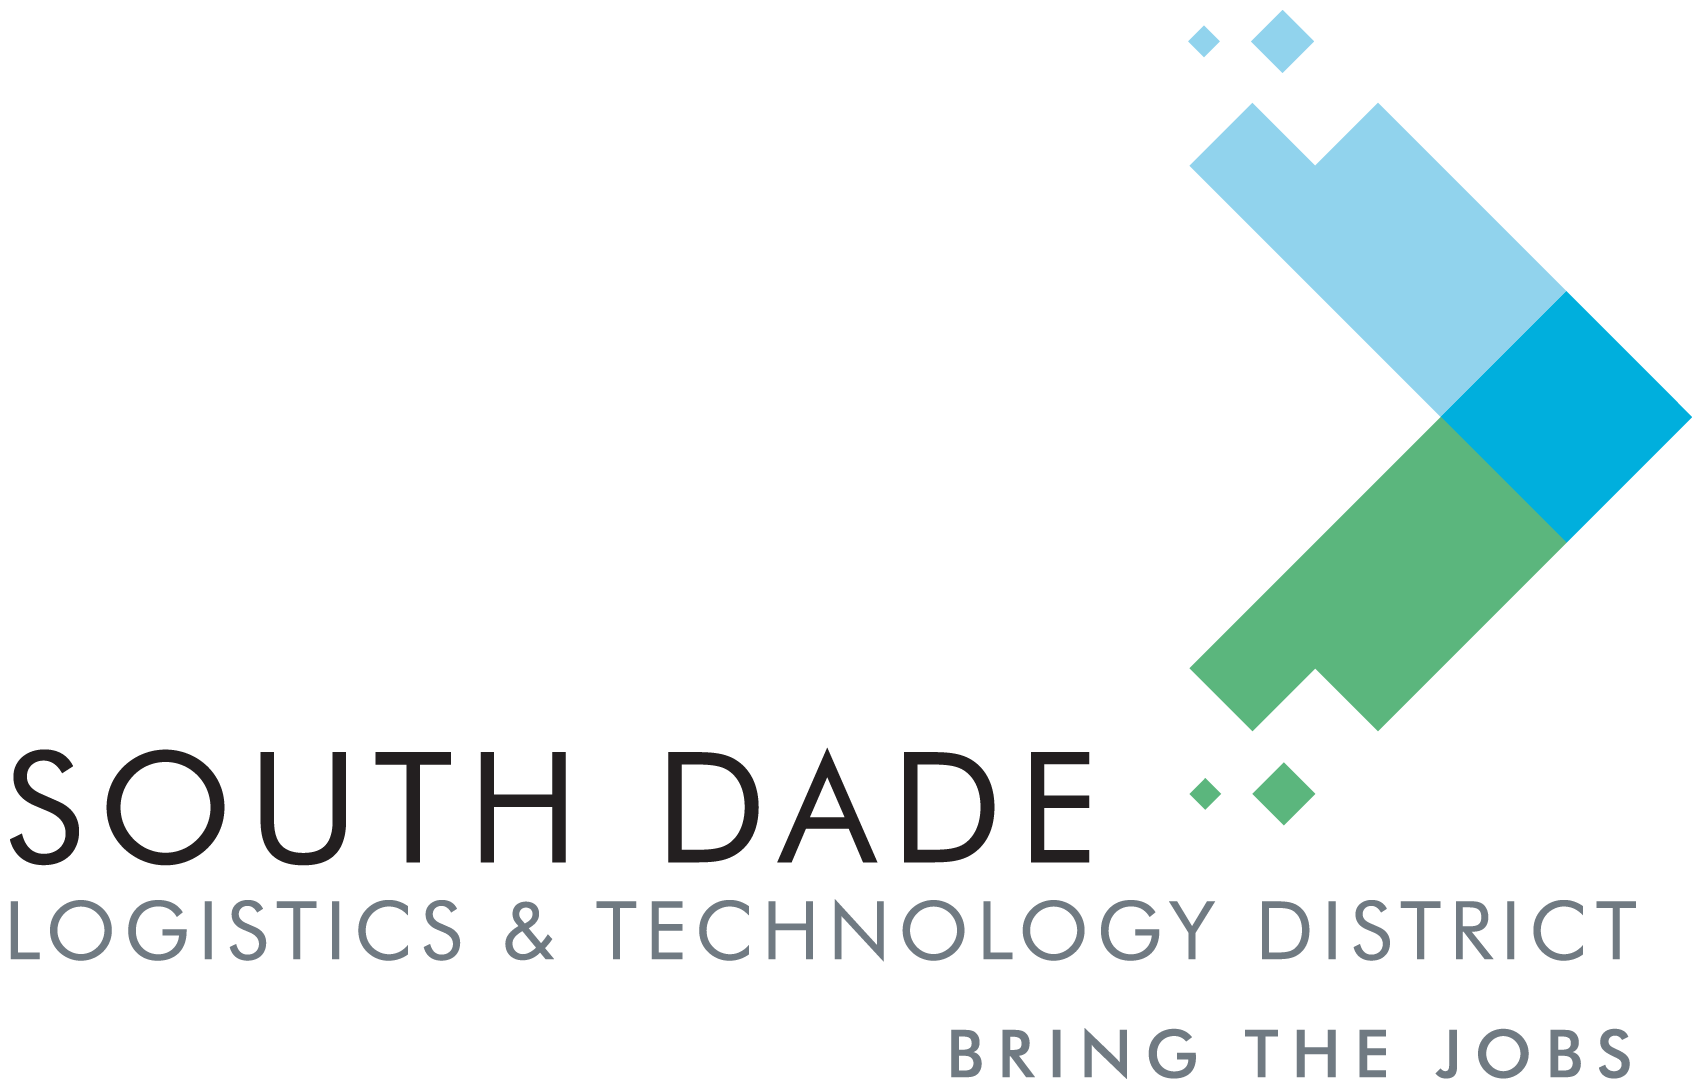 South Dade Logistics & Technology District